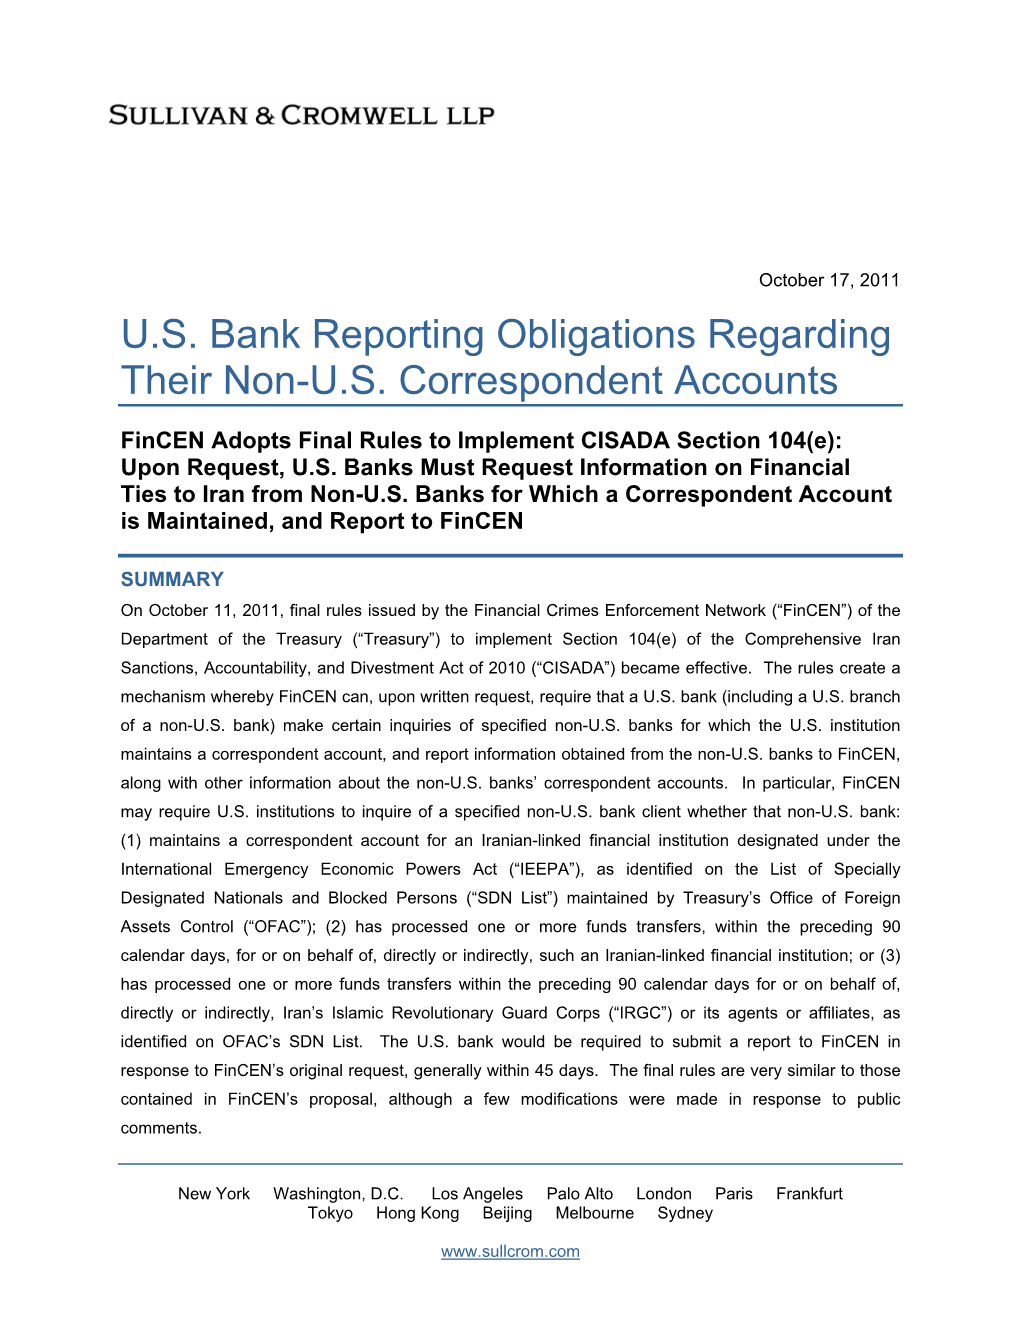 U.S. Bank Reporting Obligations Regarding Their Non-U.S. Correspondent Accounts